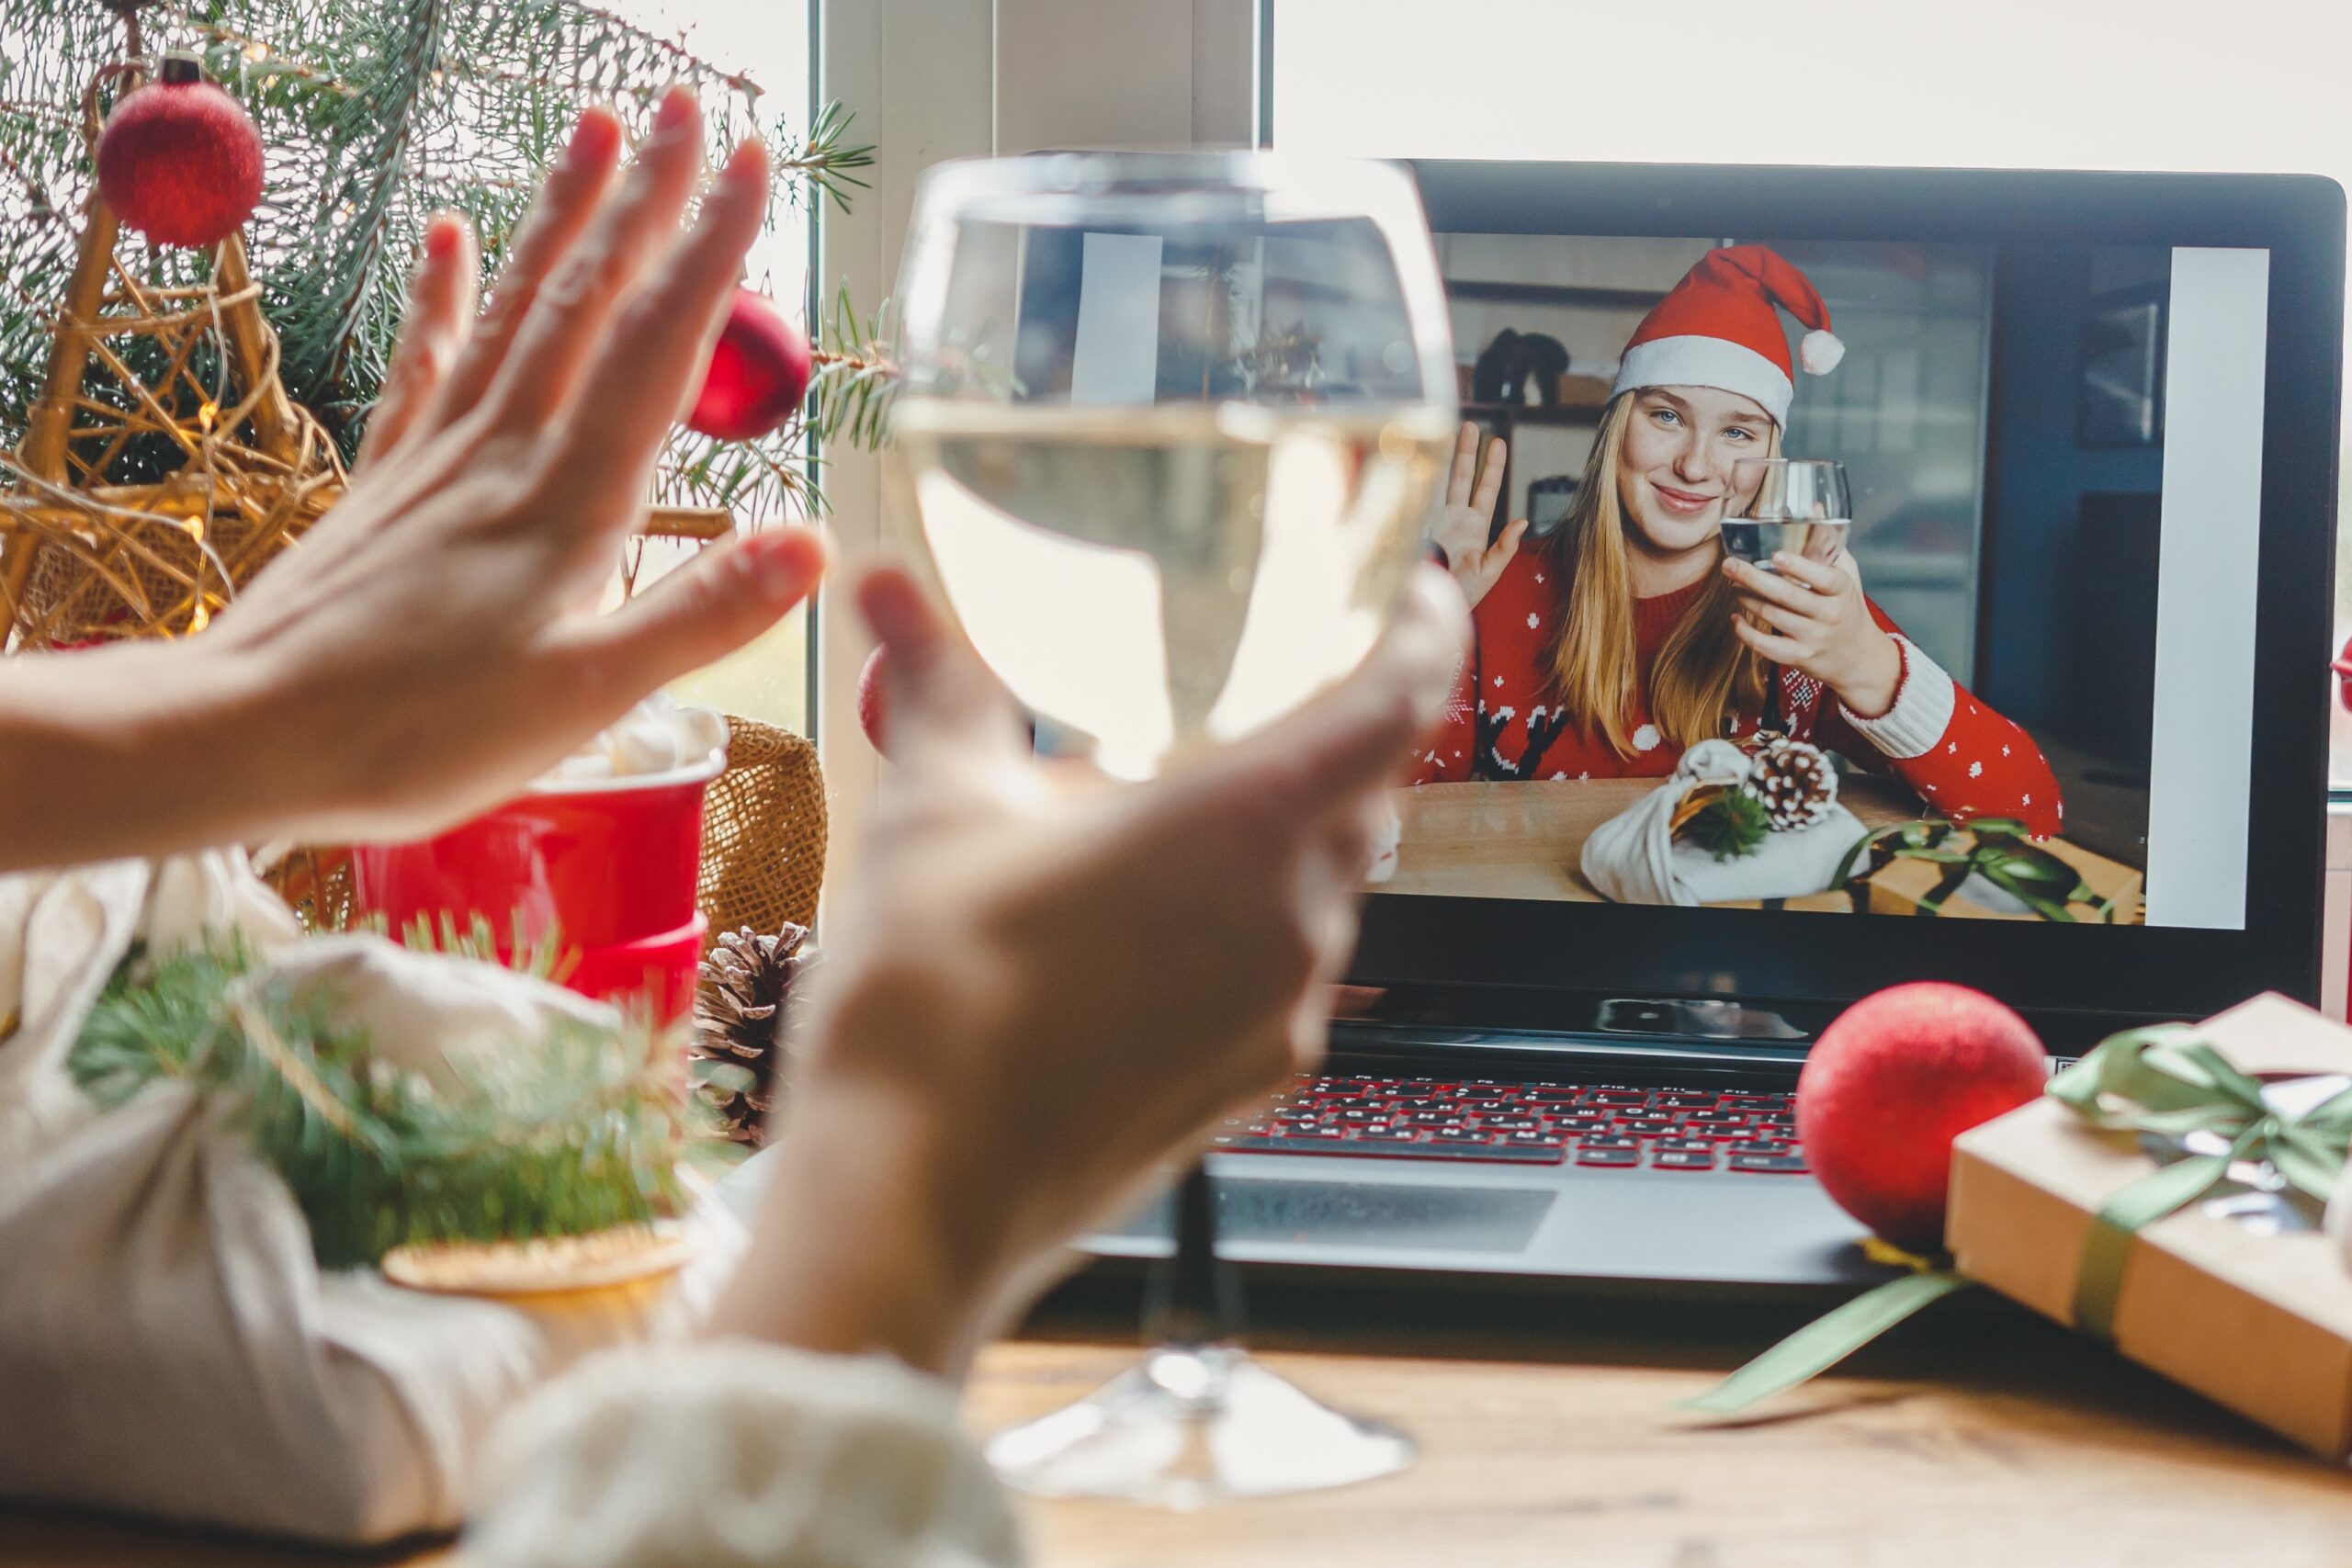 Remote Christmas celebration over video call